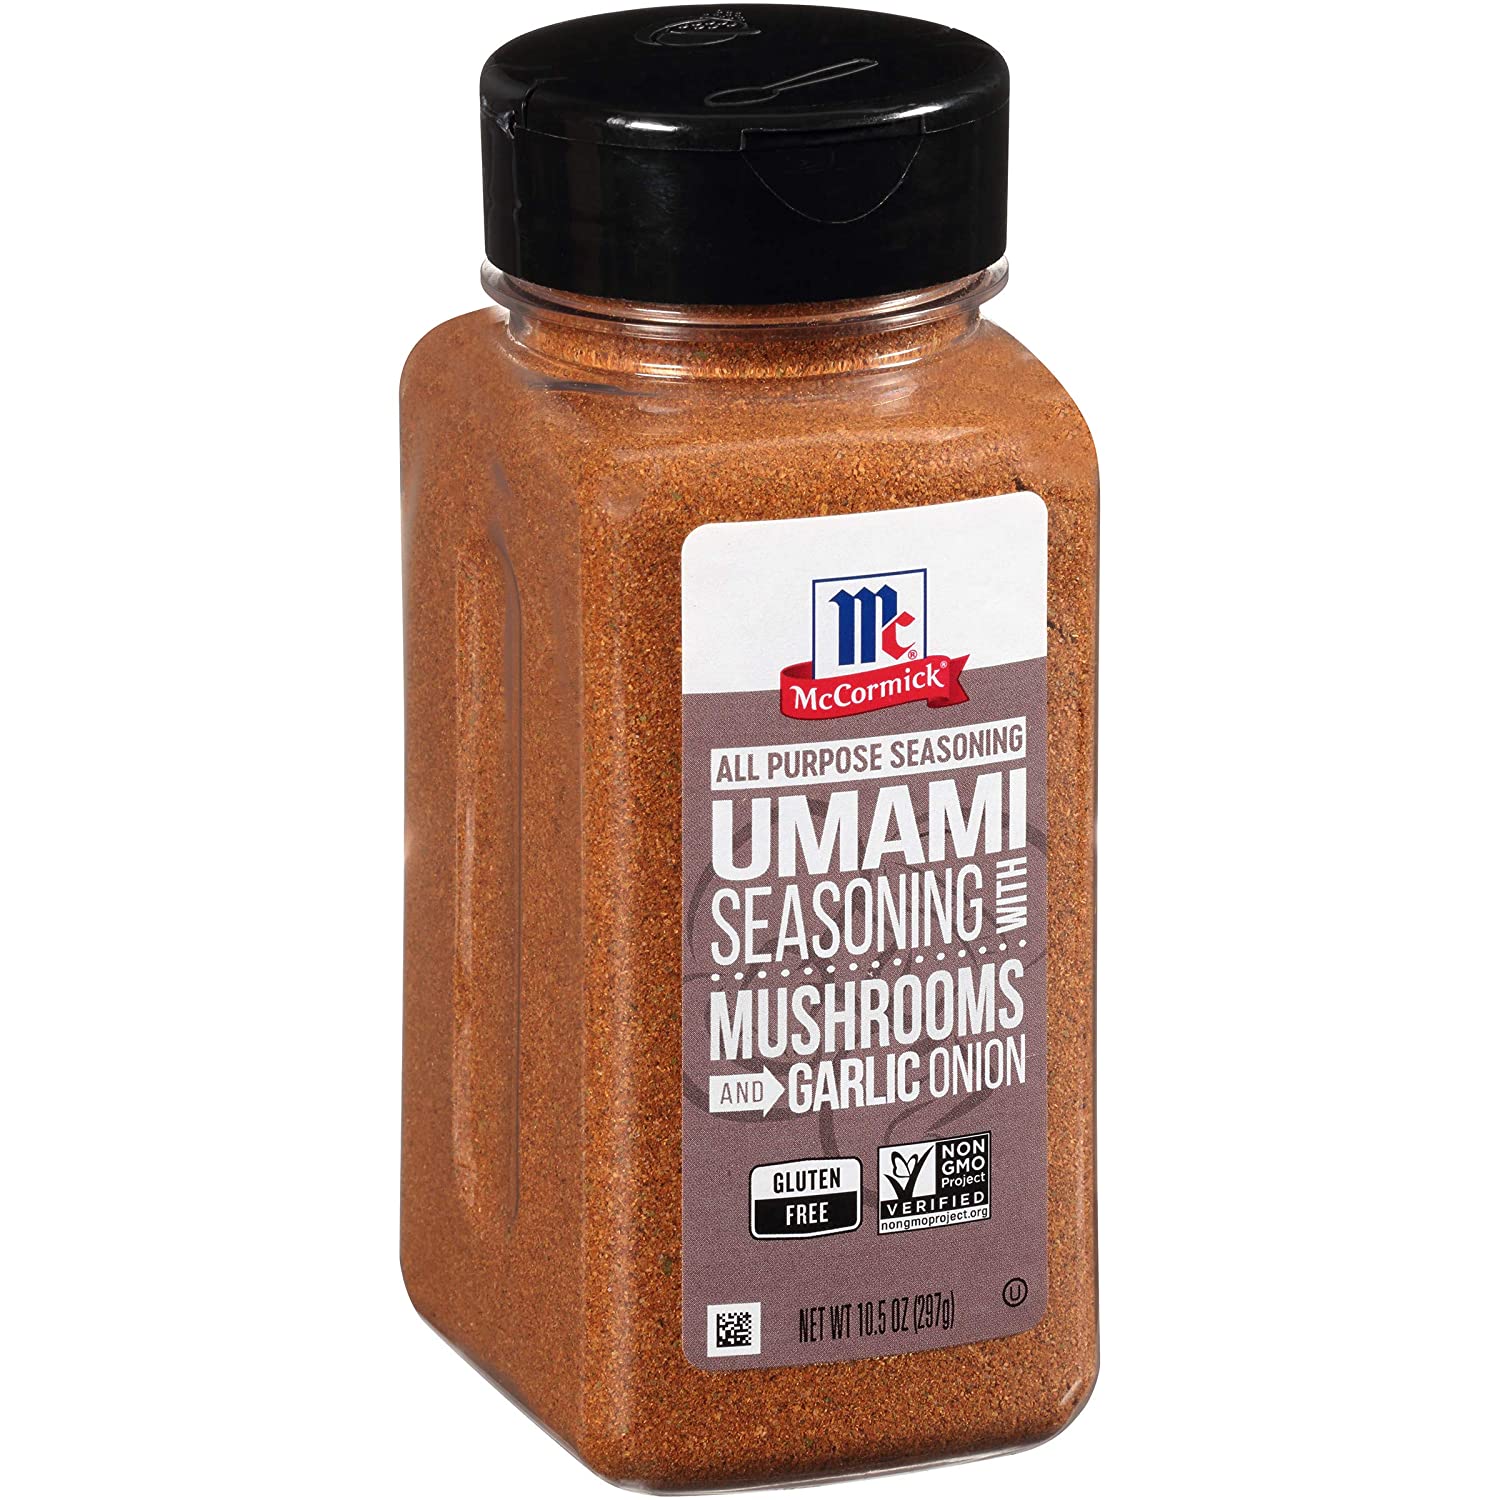 10.5-Oz McCormick Umami Seasoning w/ Mushrooms and Garlic Onion $5.75 w/ S&S + Free Shipping w/ Prime or $25+